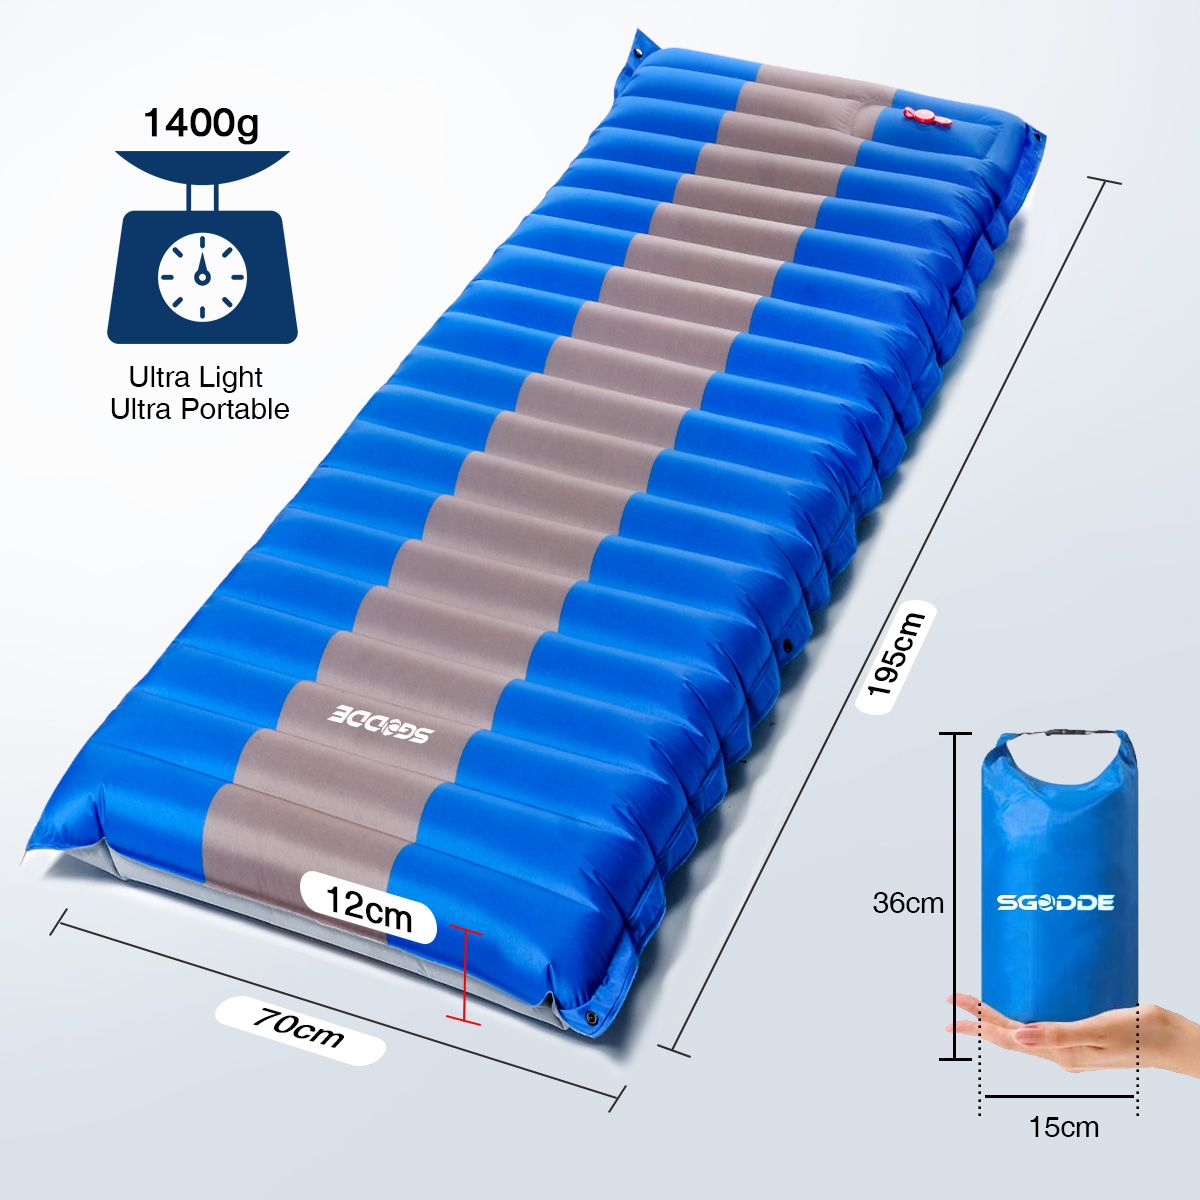 SGODDE-Inflating-Sleeping-Pad-Folding-Portable-Waterproof-Spliceable-Air-Mattress-Camping-Travel-Bea-1878547-6